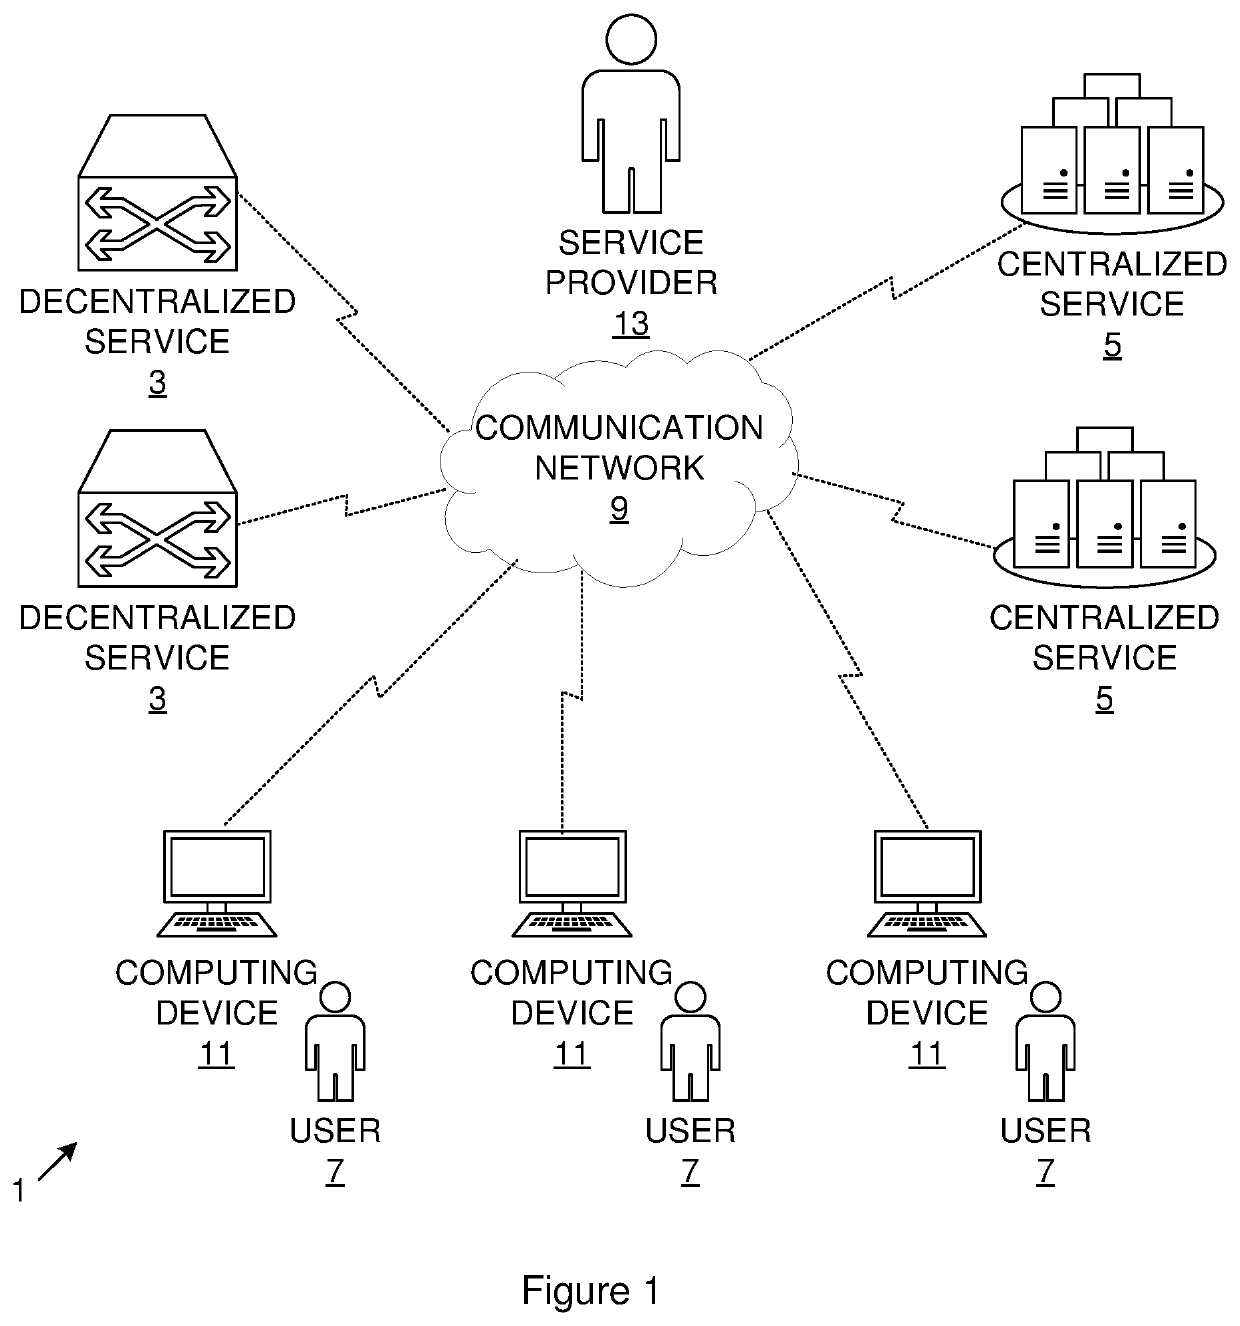 Distributed computing platform service management